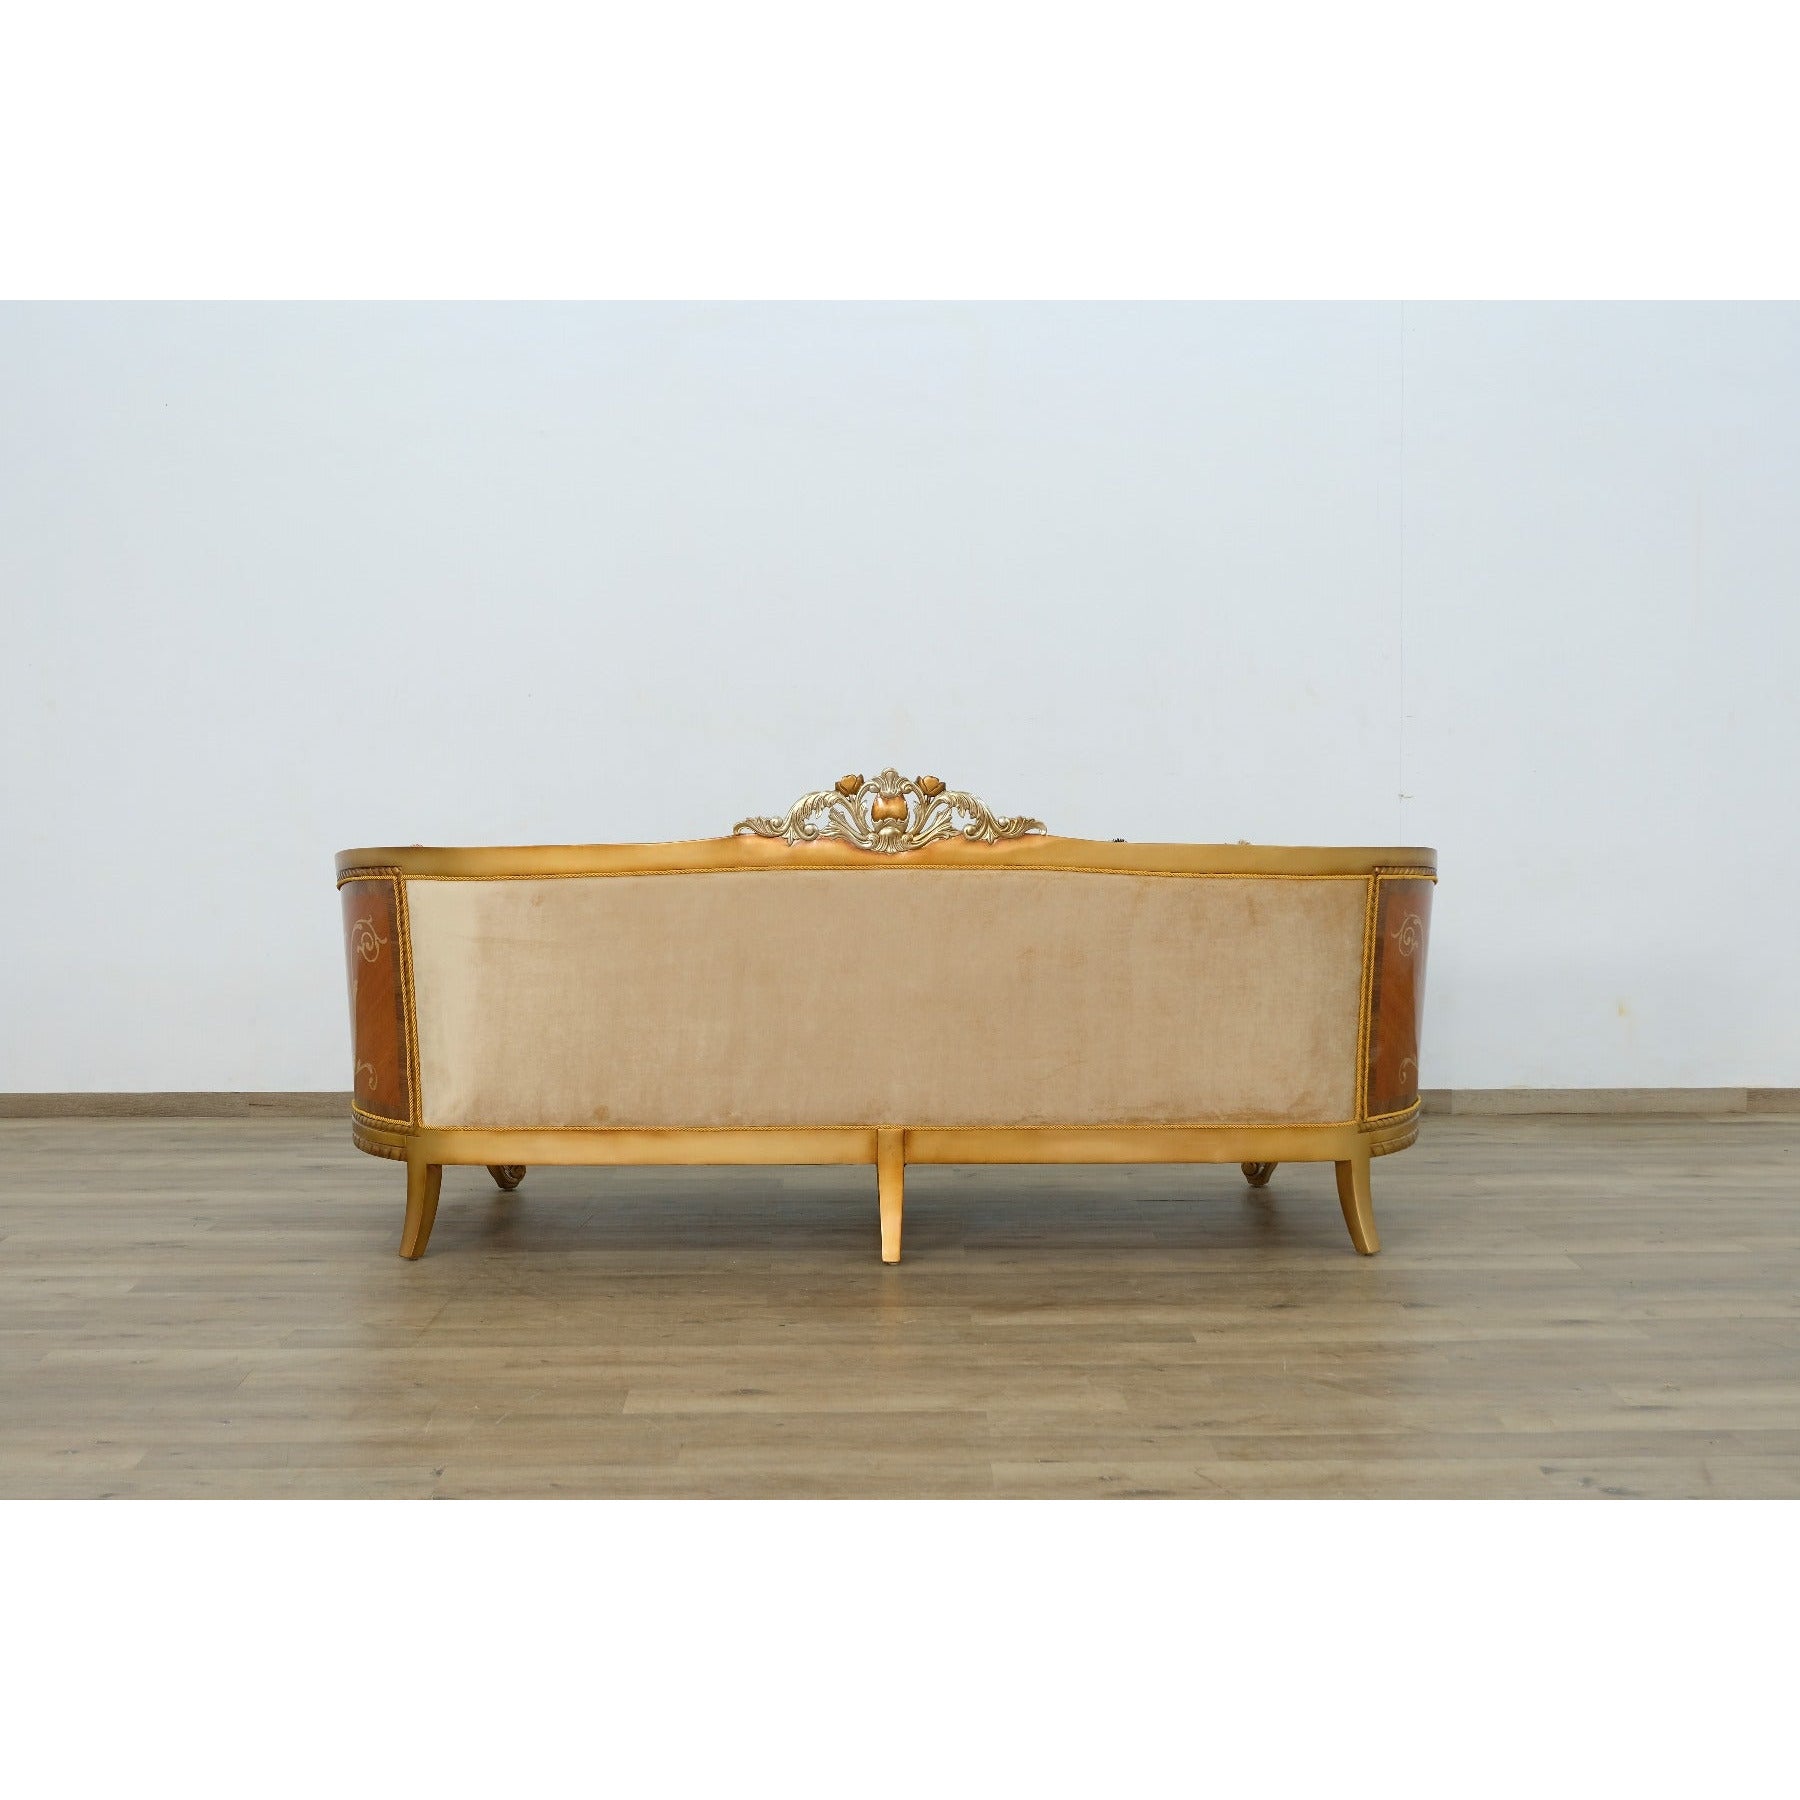 European Furniture - Luxor II Sofa in Black Gold - 68586-S - New Star Living